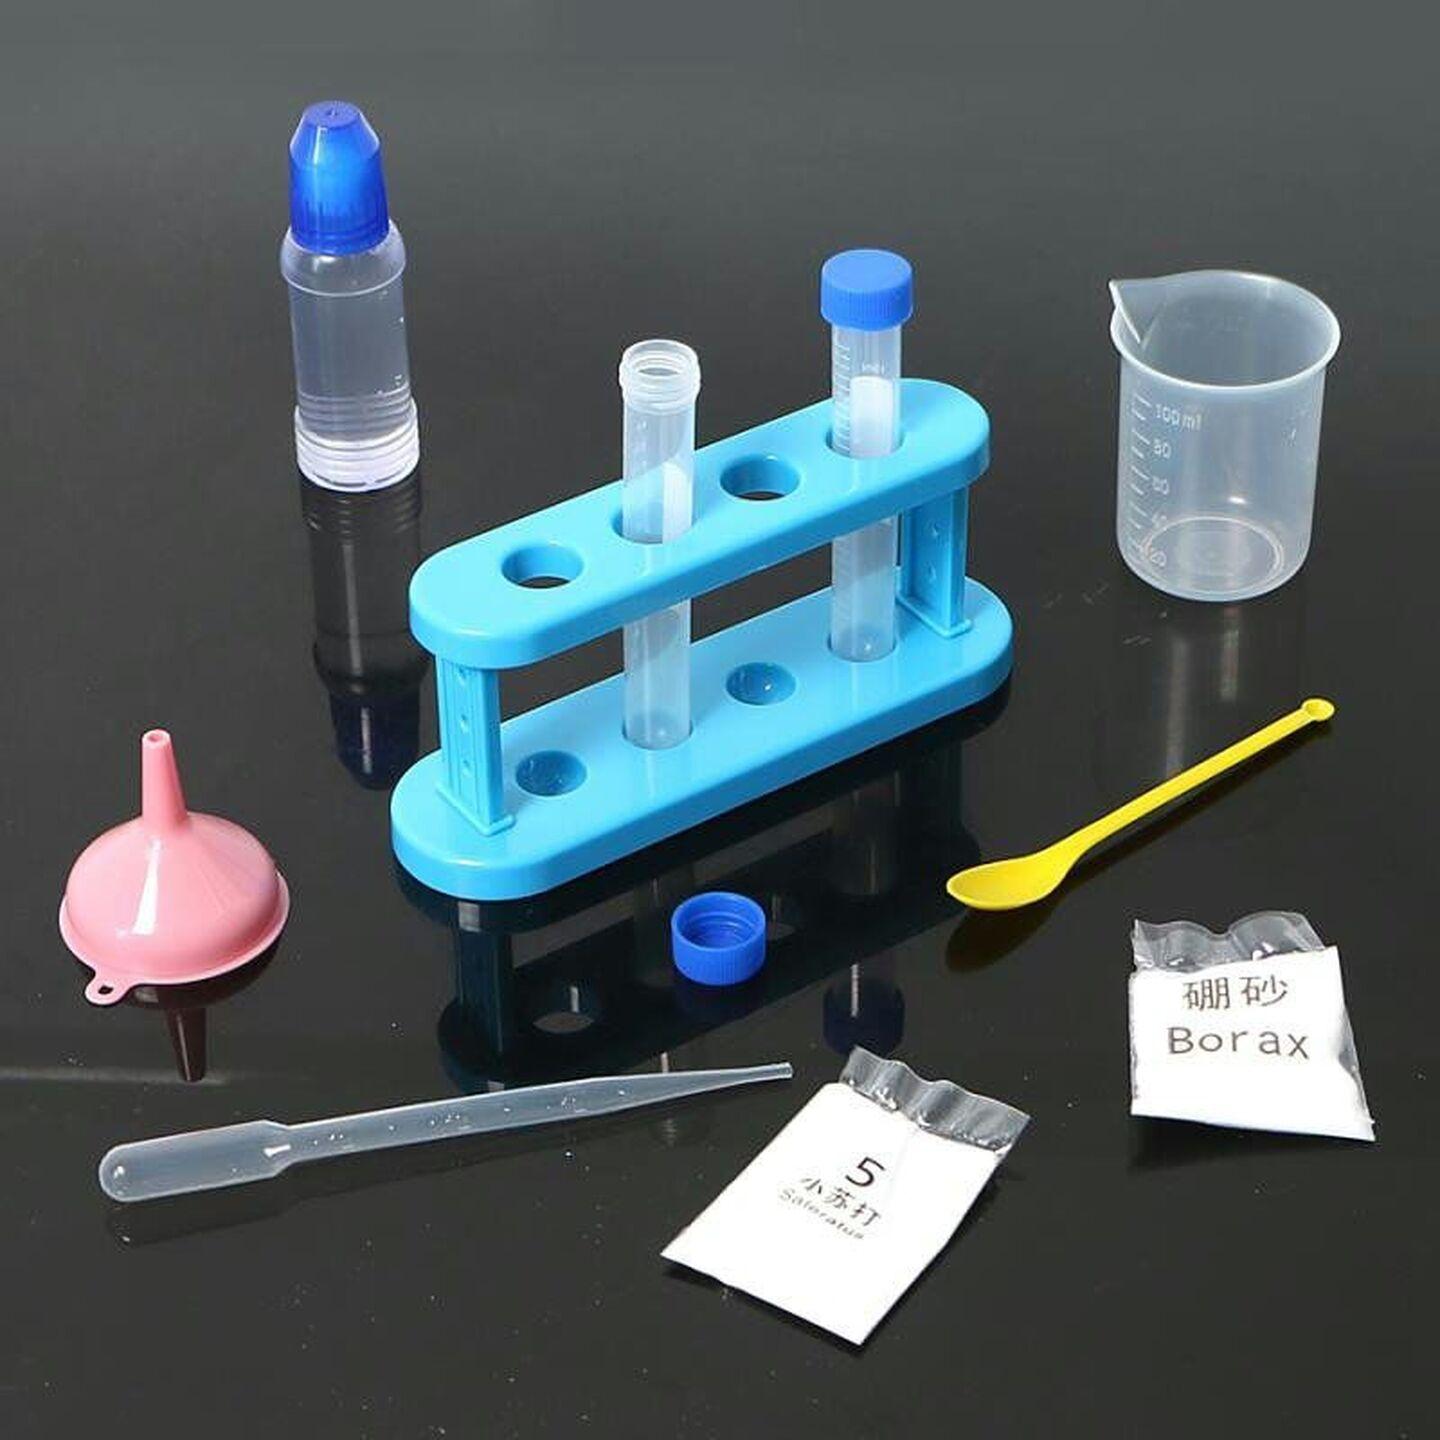 Chemical Experiments STEM Science Kit 